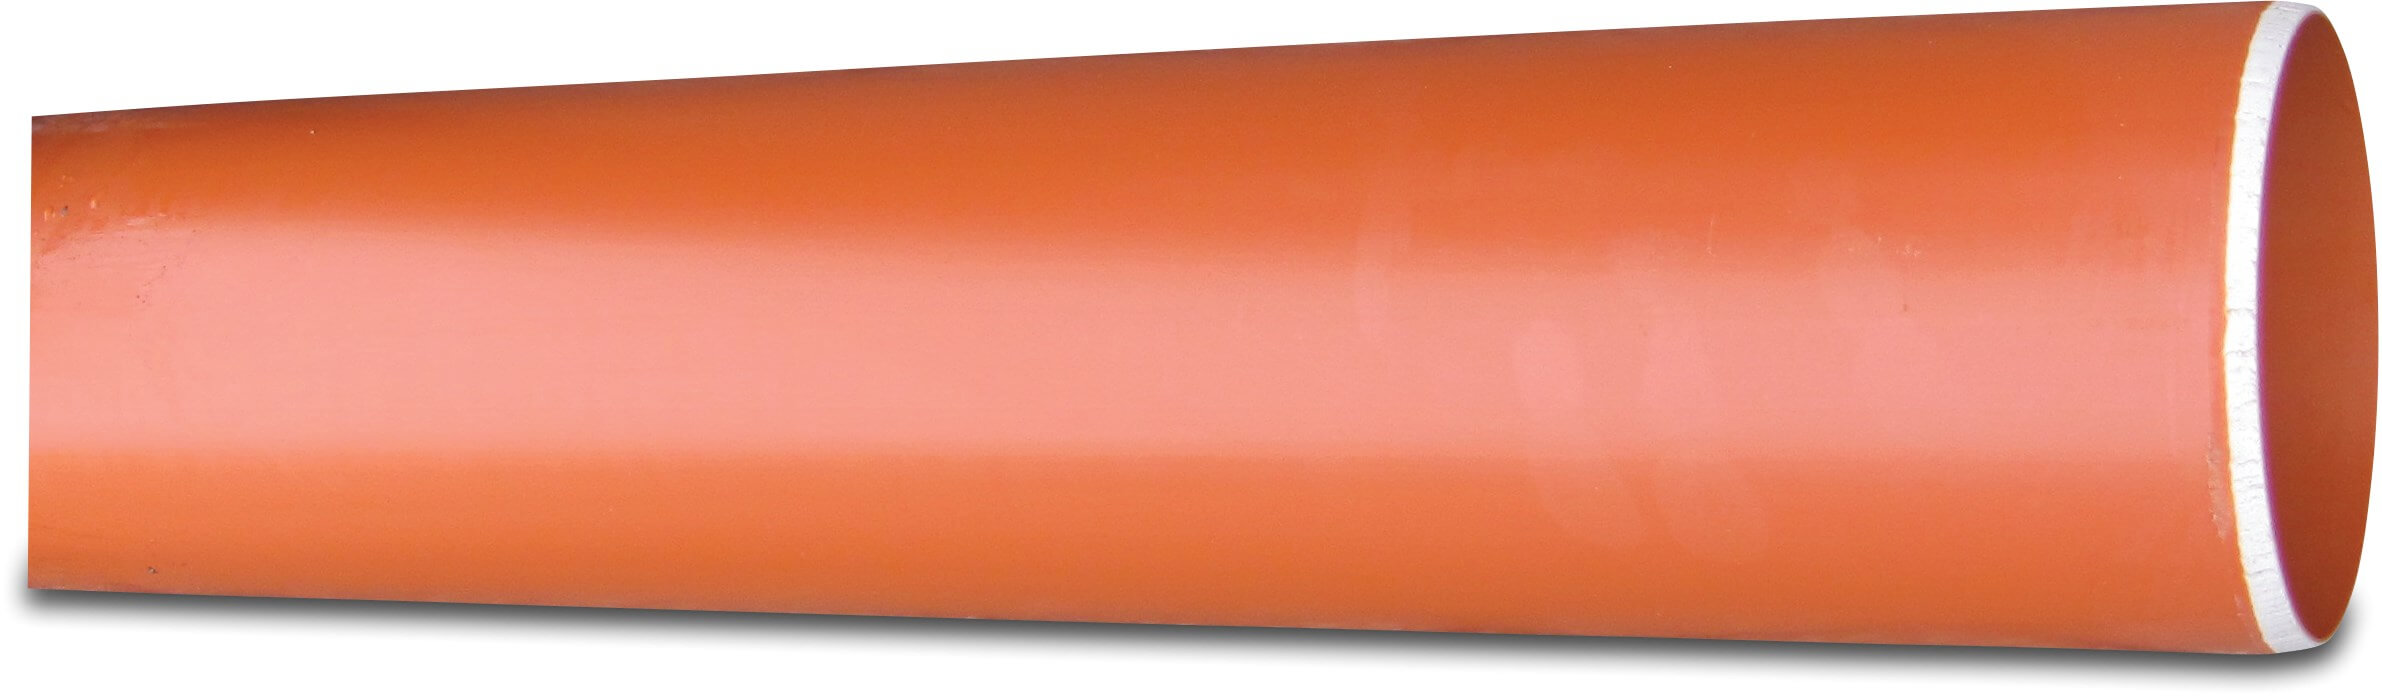 Kloakrør PVC-U 110 mm x 3,2 mm SN4 glat rødbrun 5m KOMO/BENOR